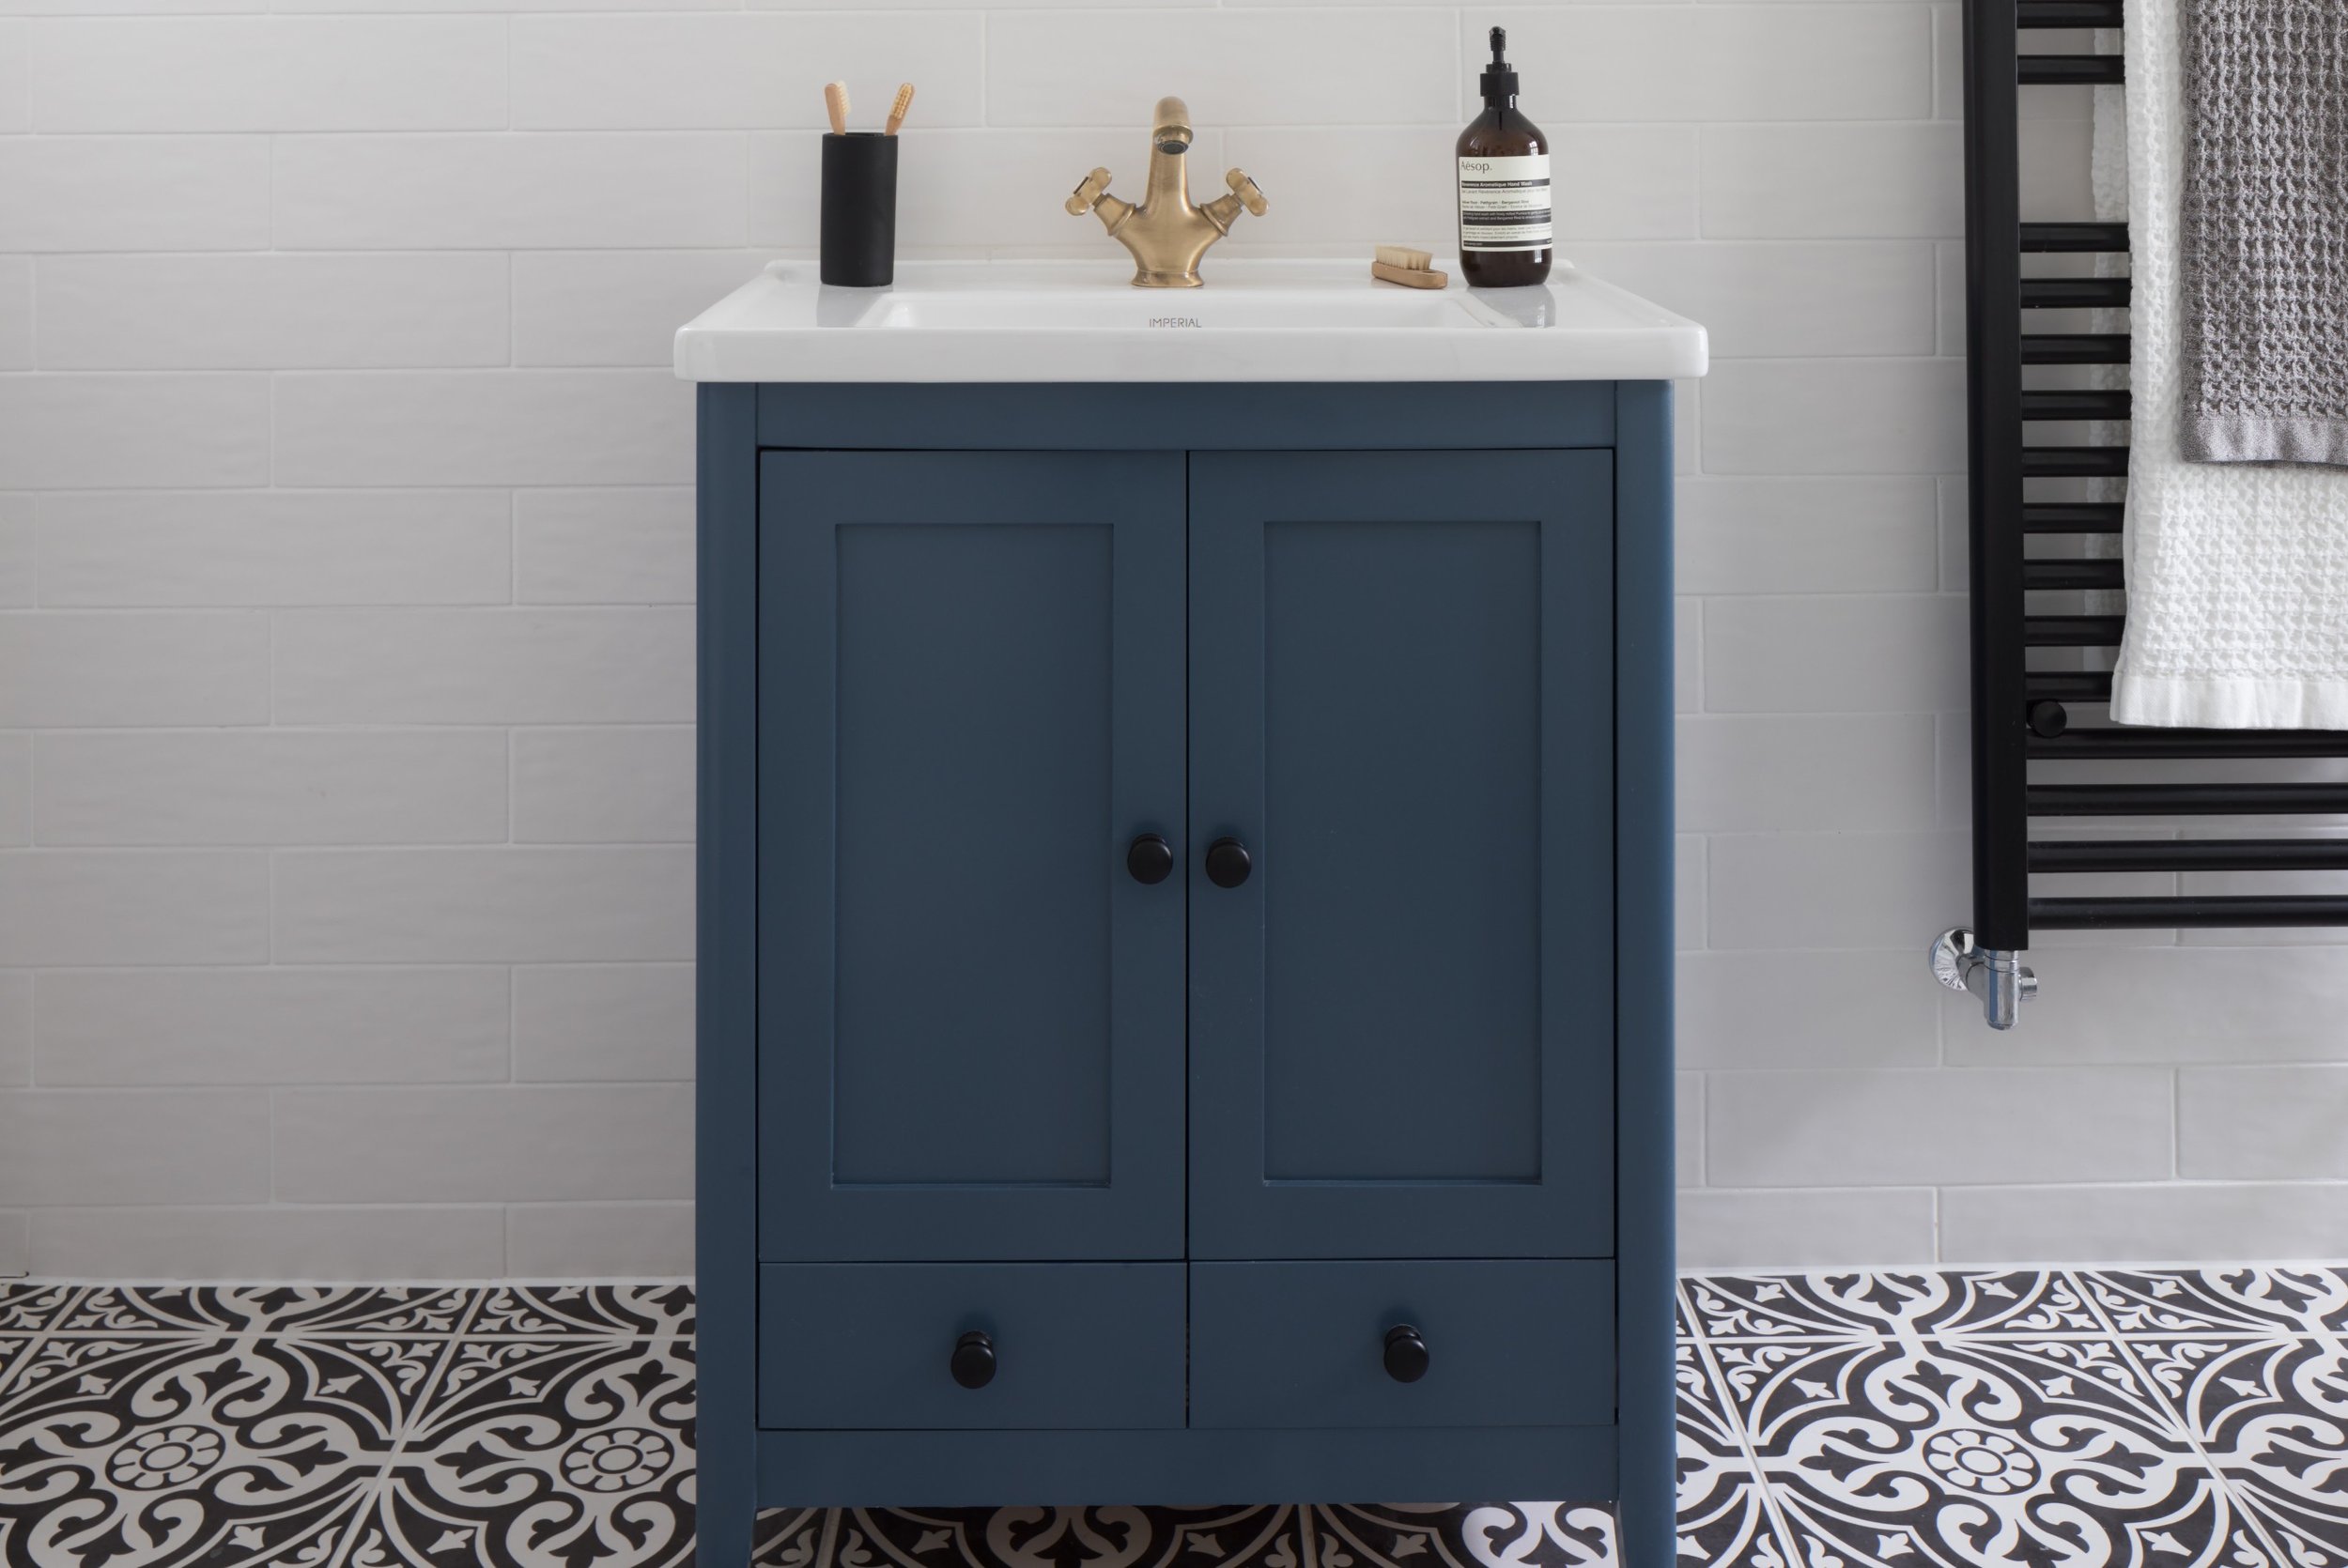 blue-vanity-unit-with-patterned-monochrome-tiled-floor.jpg